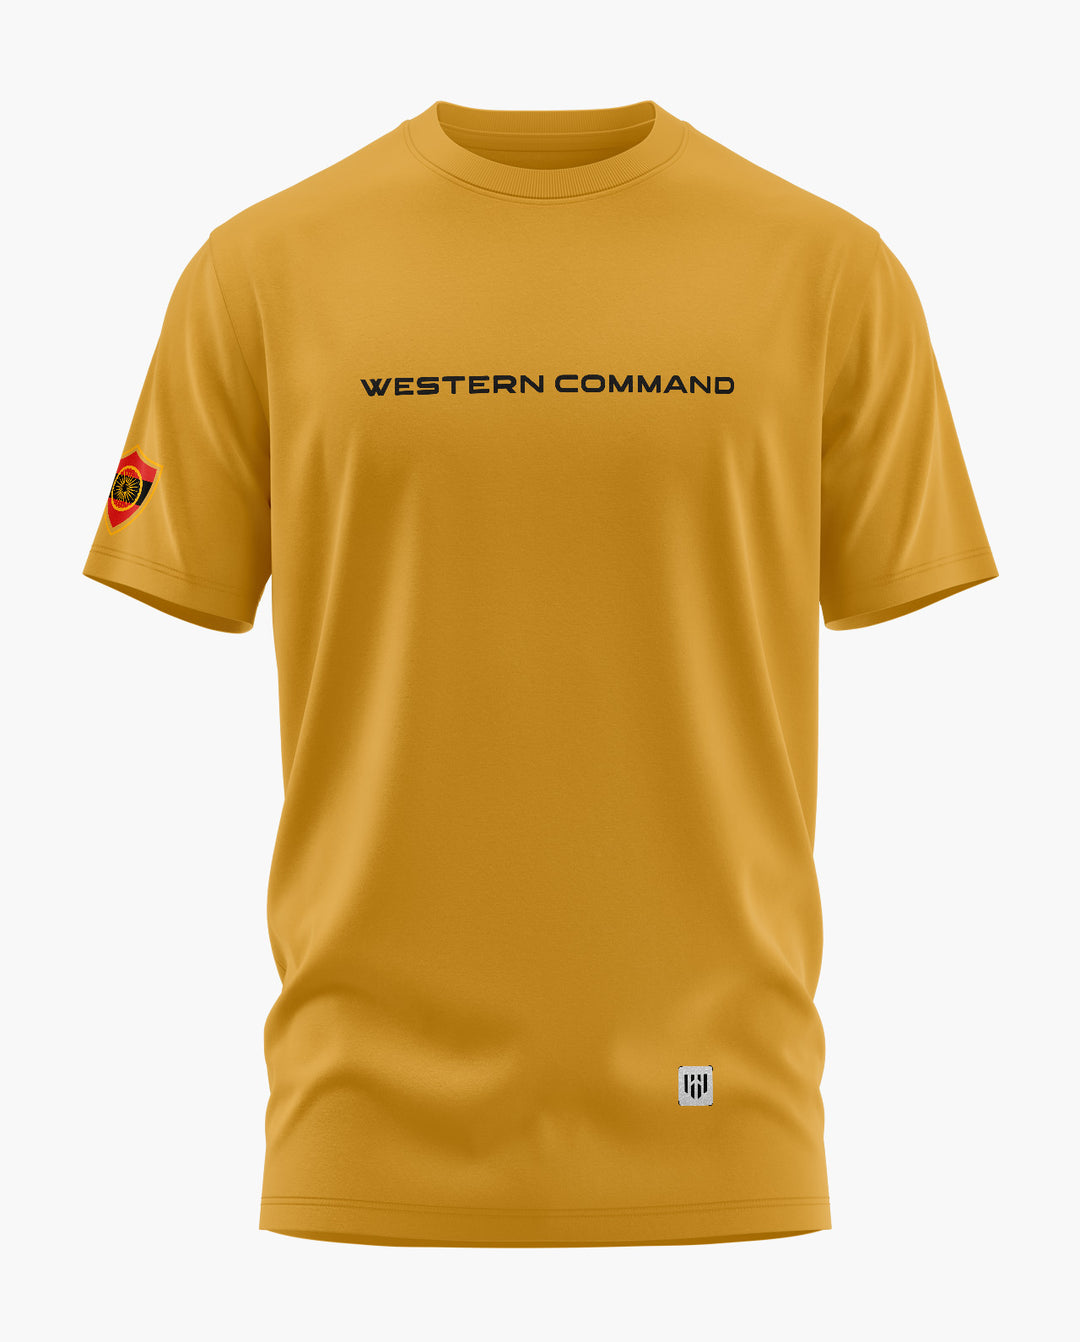 WESTERN COMMAND T-Shirt